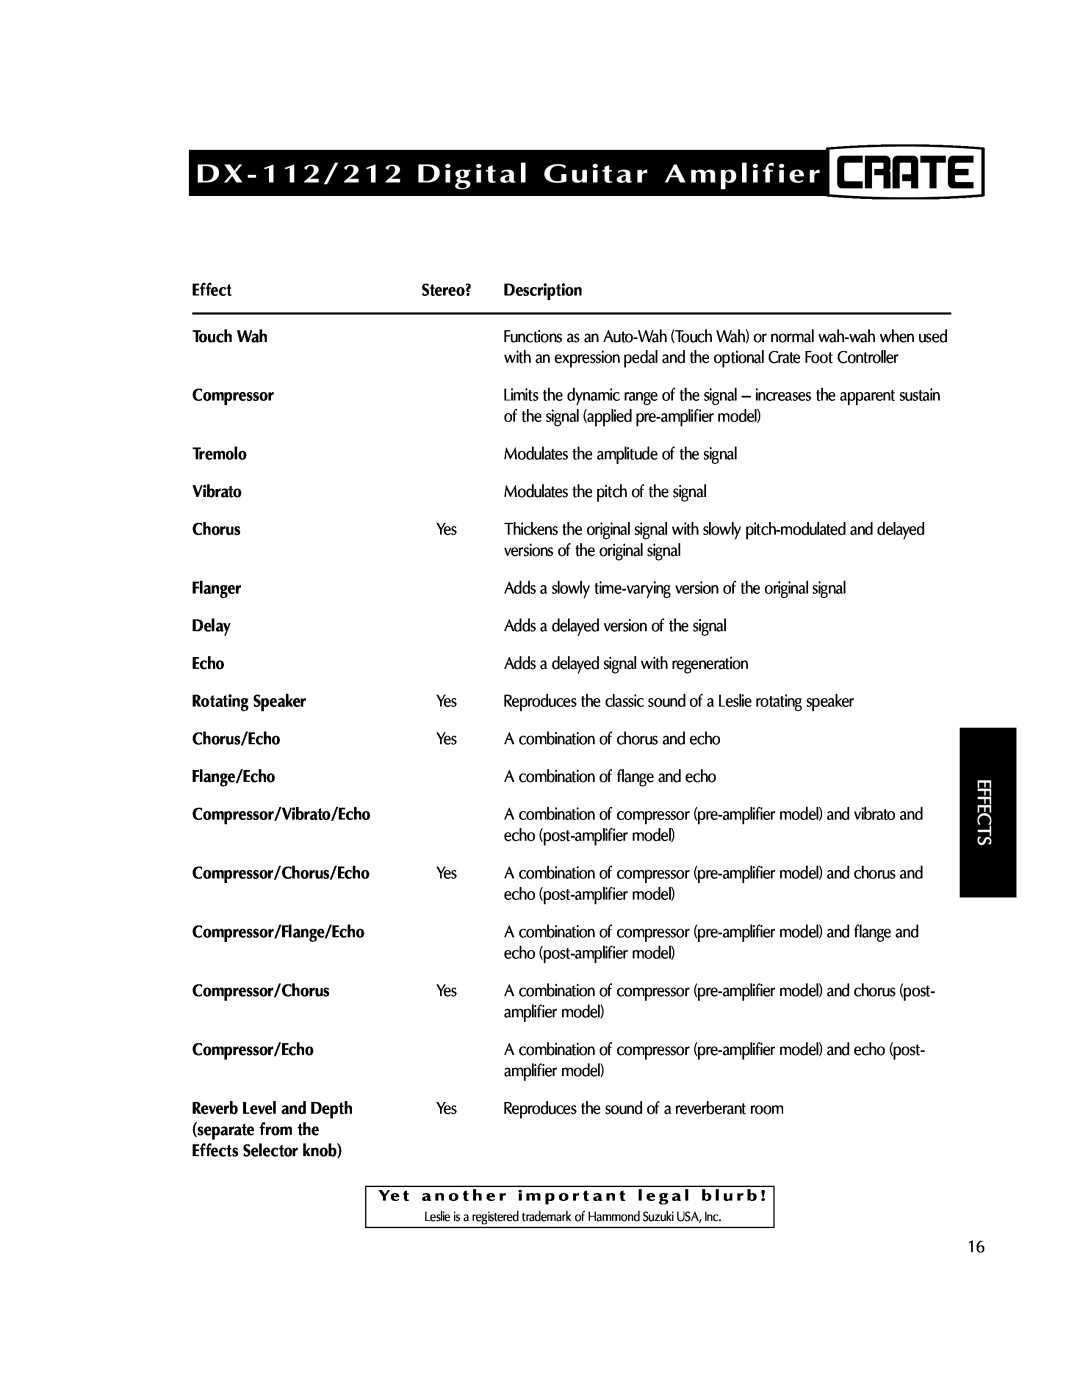 Crate Amplifiers DX-212 manual DX-112/212Digital Guitar Amplifier, Effects 